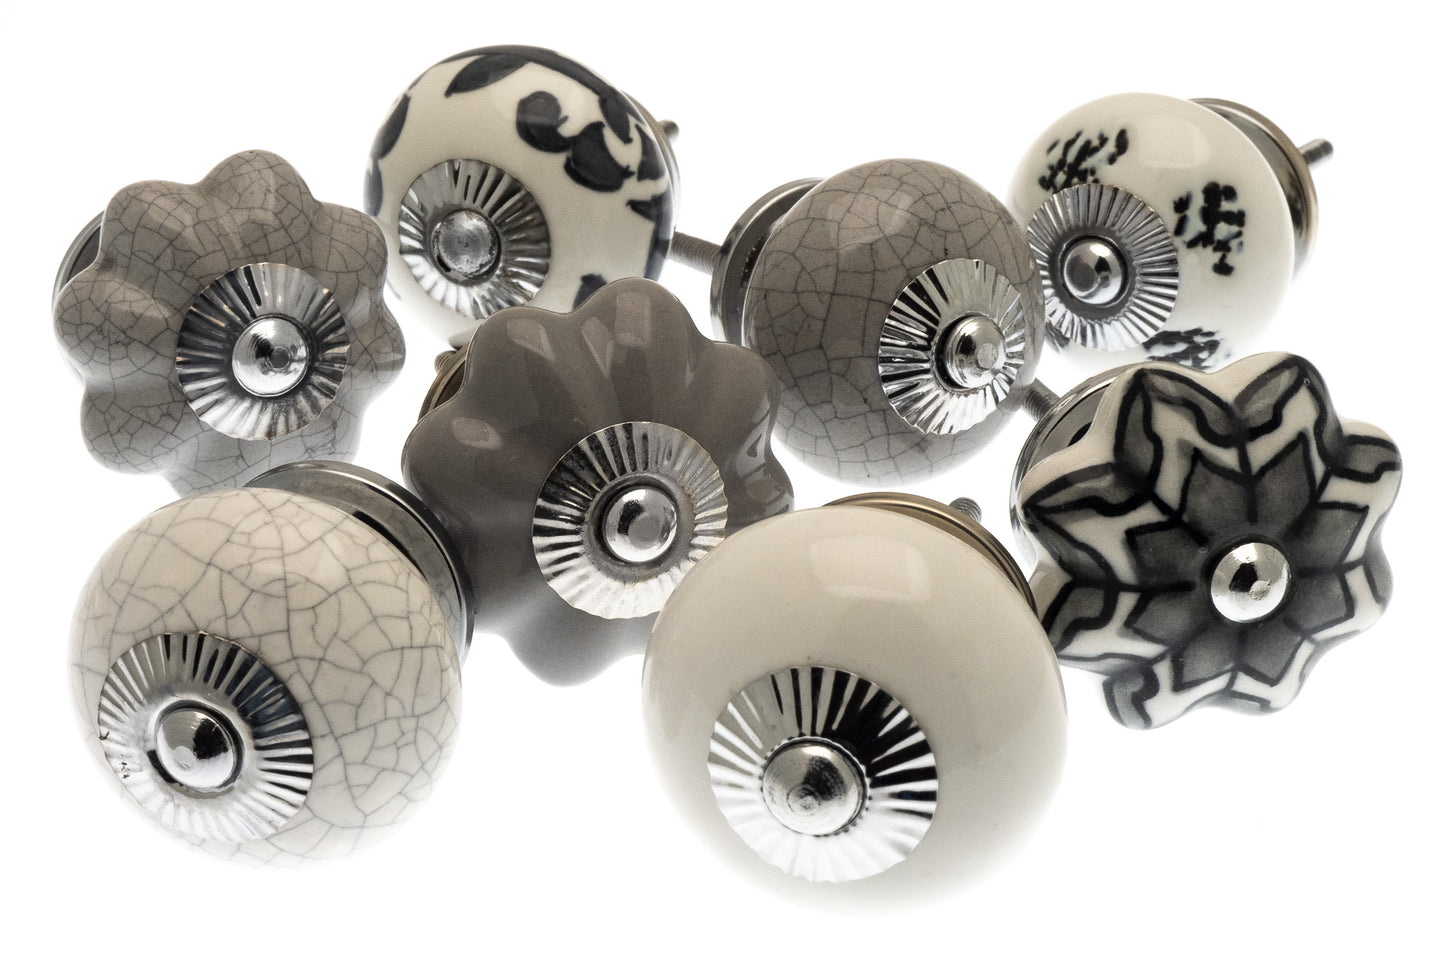 Ceramic Cupboard Knobs in 8 Pretty Shades of Subtle Greys